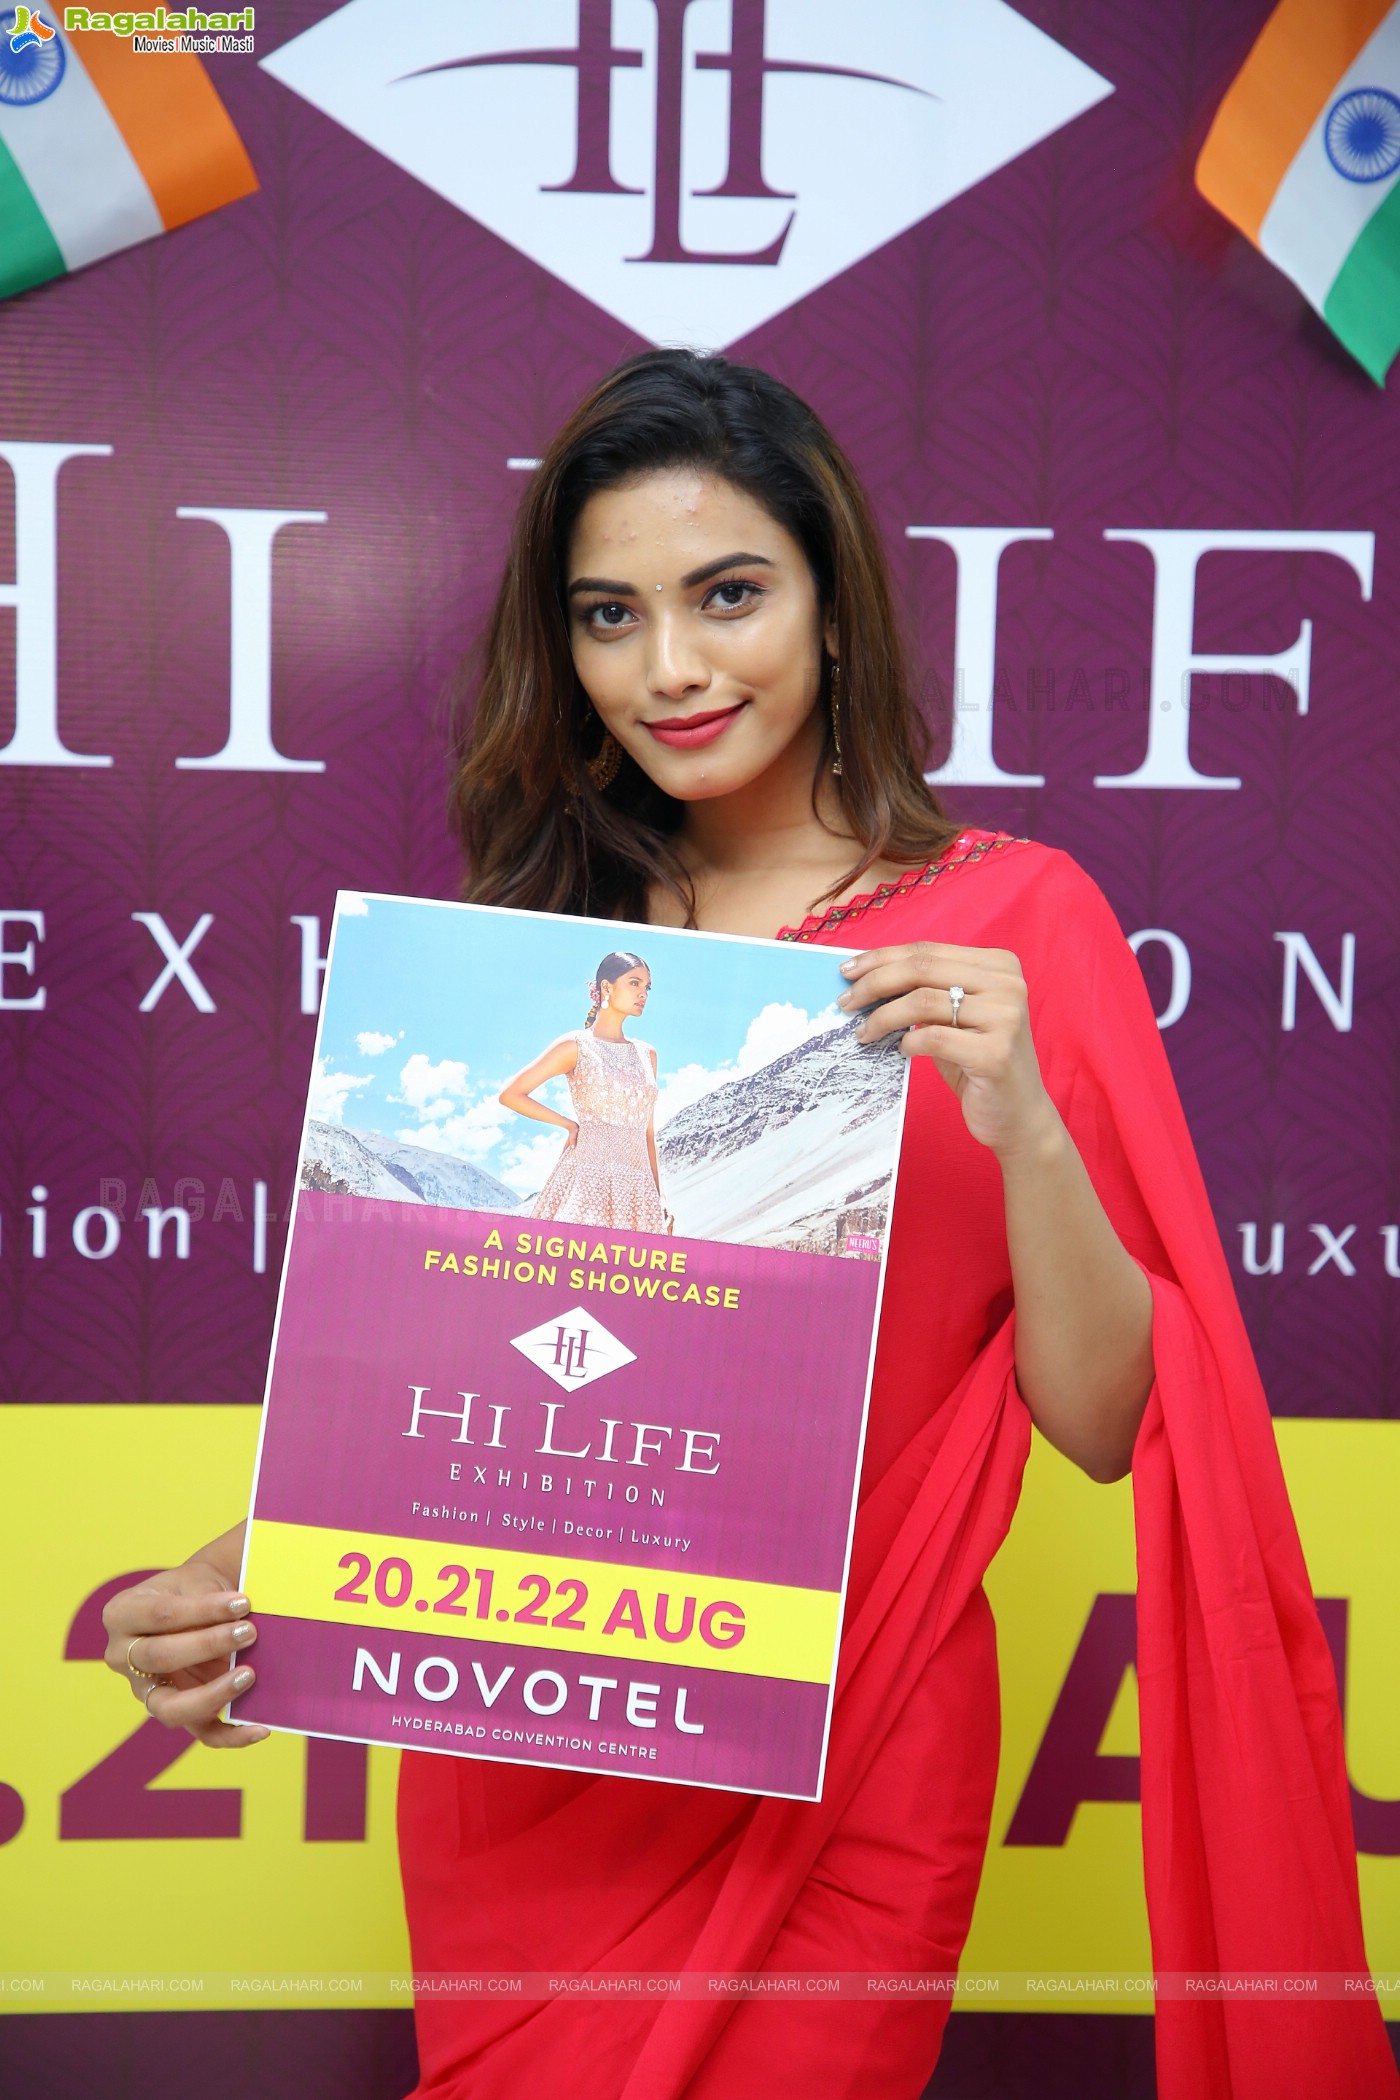 Hi Life Exhibition August 2022 Curtain Raiser and Fashion Showcase, Hyderabad